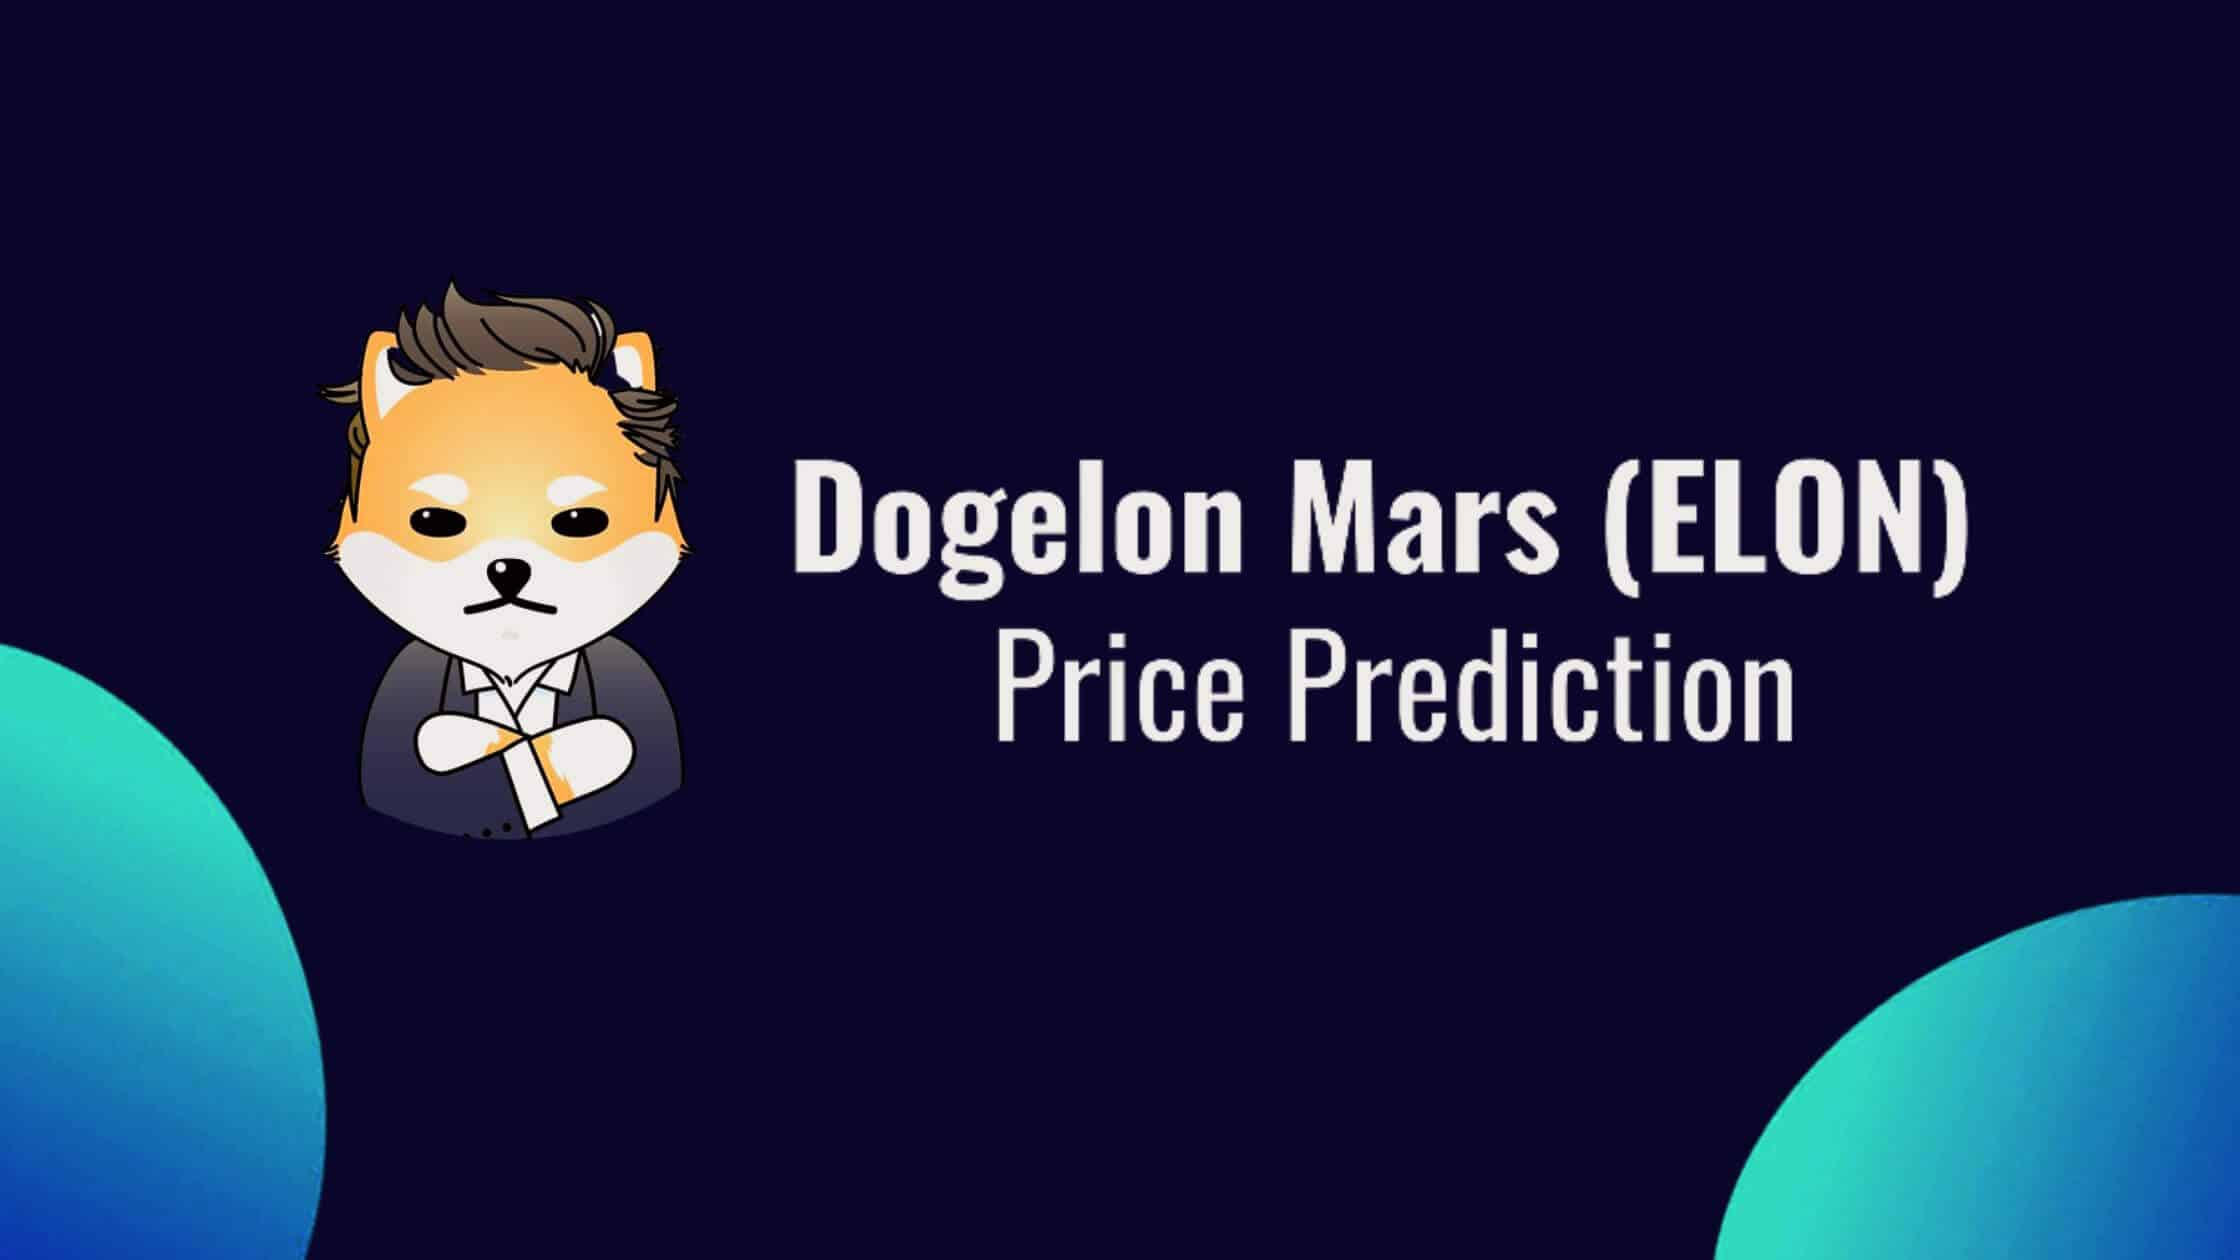 Dogelon Mars (ELON) Price Prediction – 2022, 2025, 2030 Investment Guidance